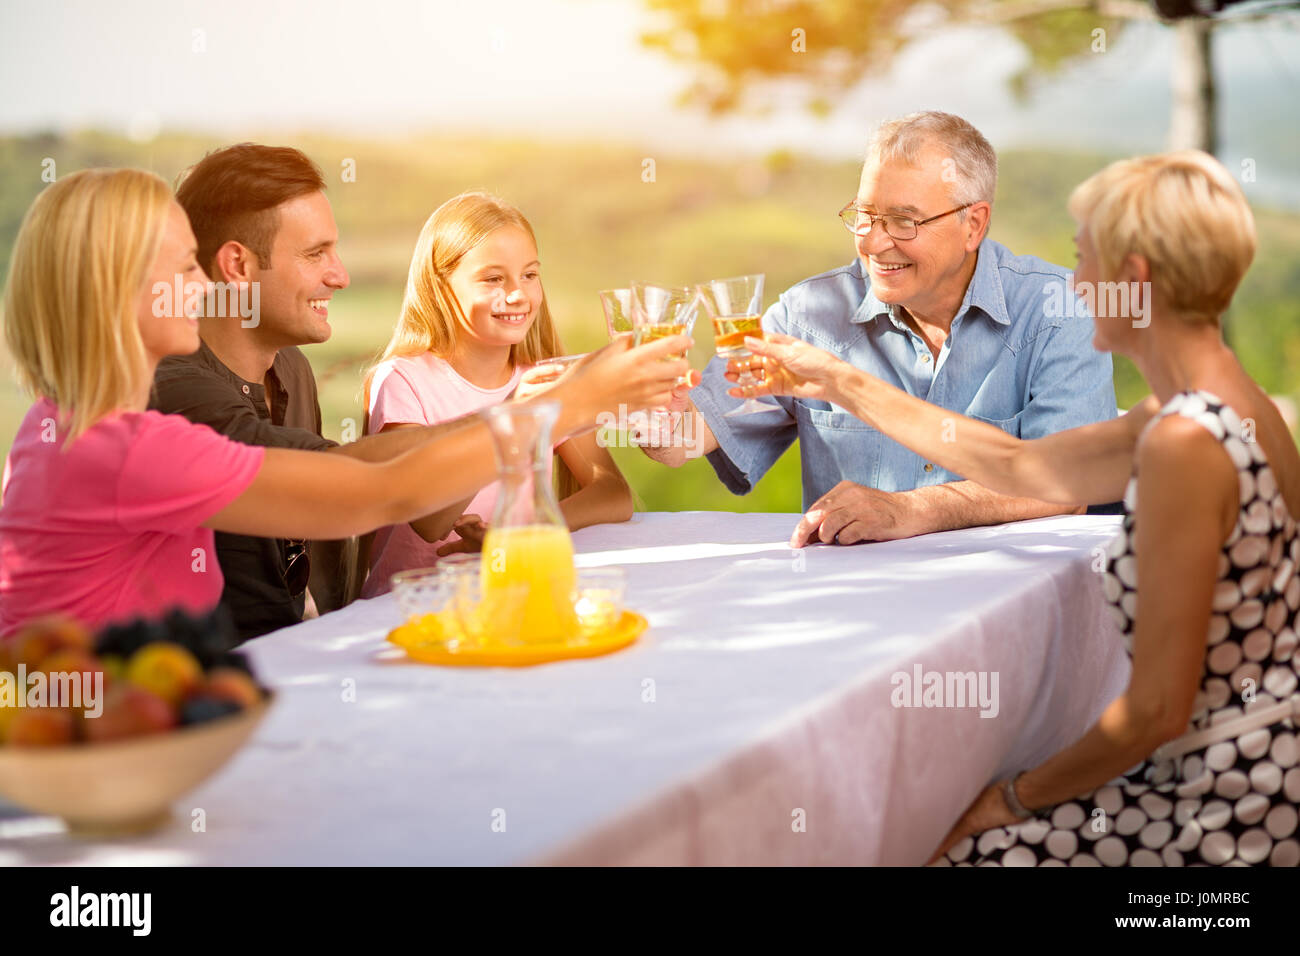 family celebrate party picnic joyful lifestyle drinking concept Stock Photo